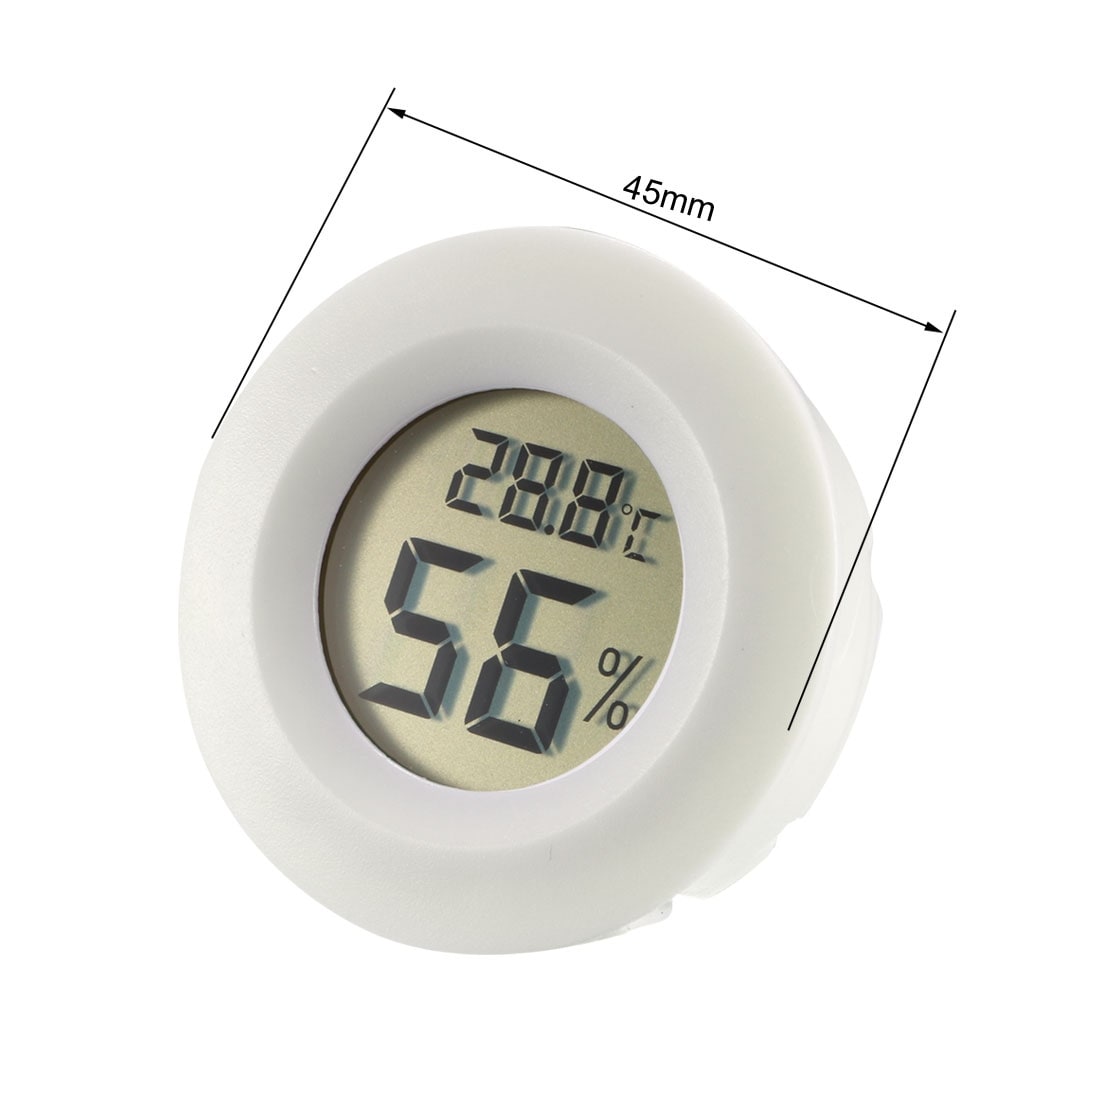 Round Digital Thermo-hygrometer